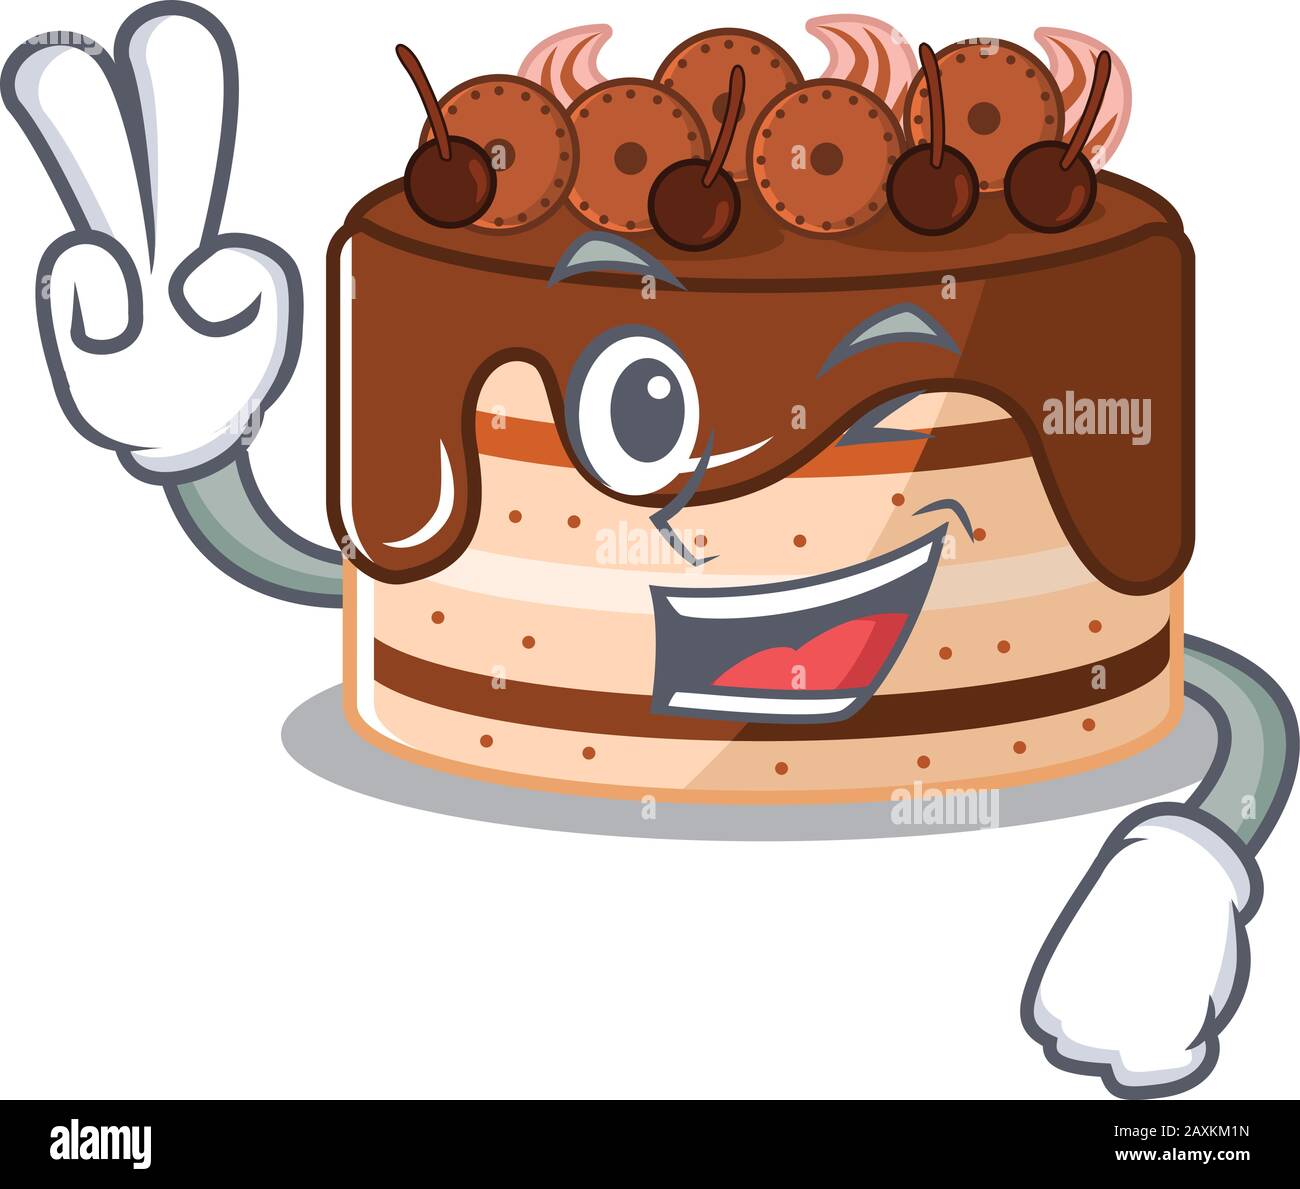 Chocolate Cakes PNG Image, Cartoon Chocolate Cake, Cartoon, Chocolates,  Dessert PNG Image For Free Download